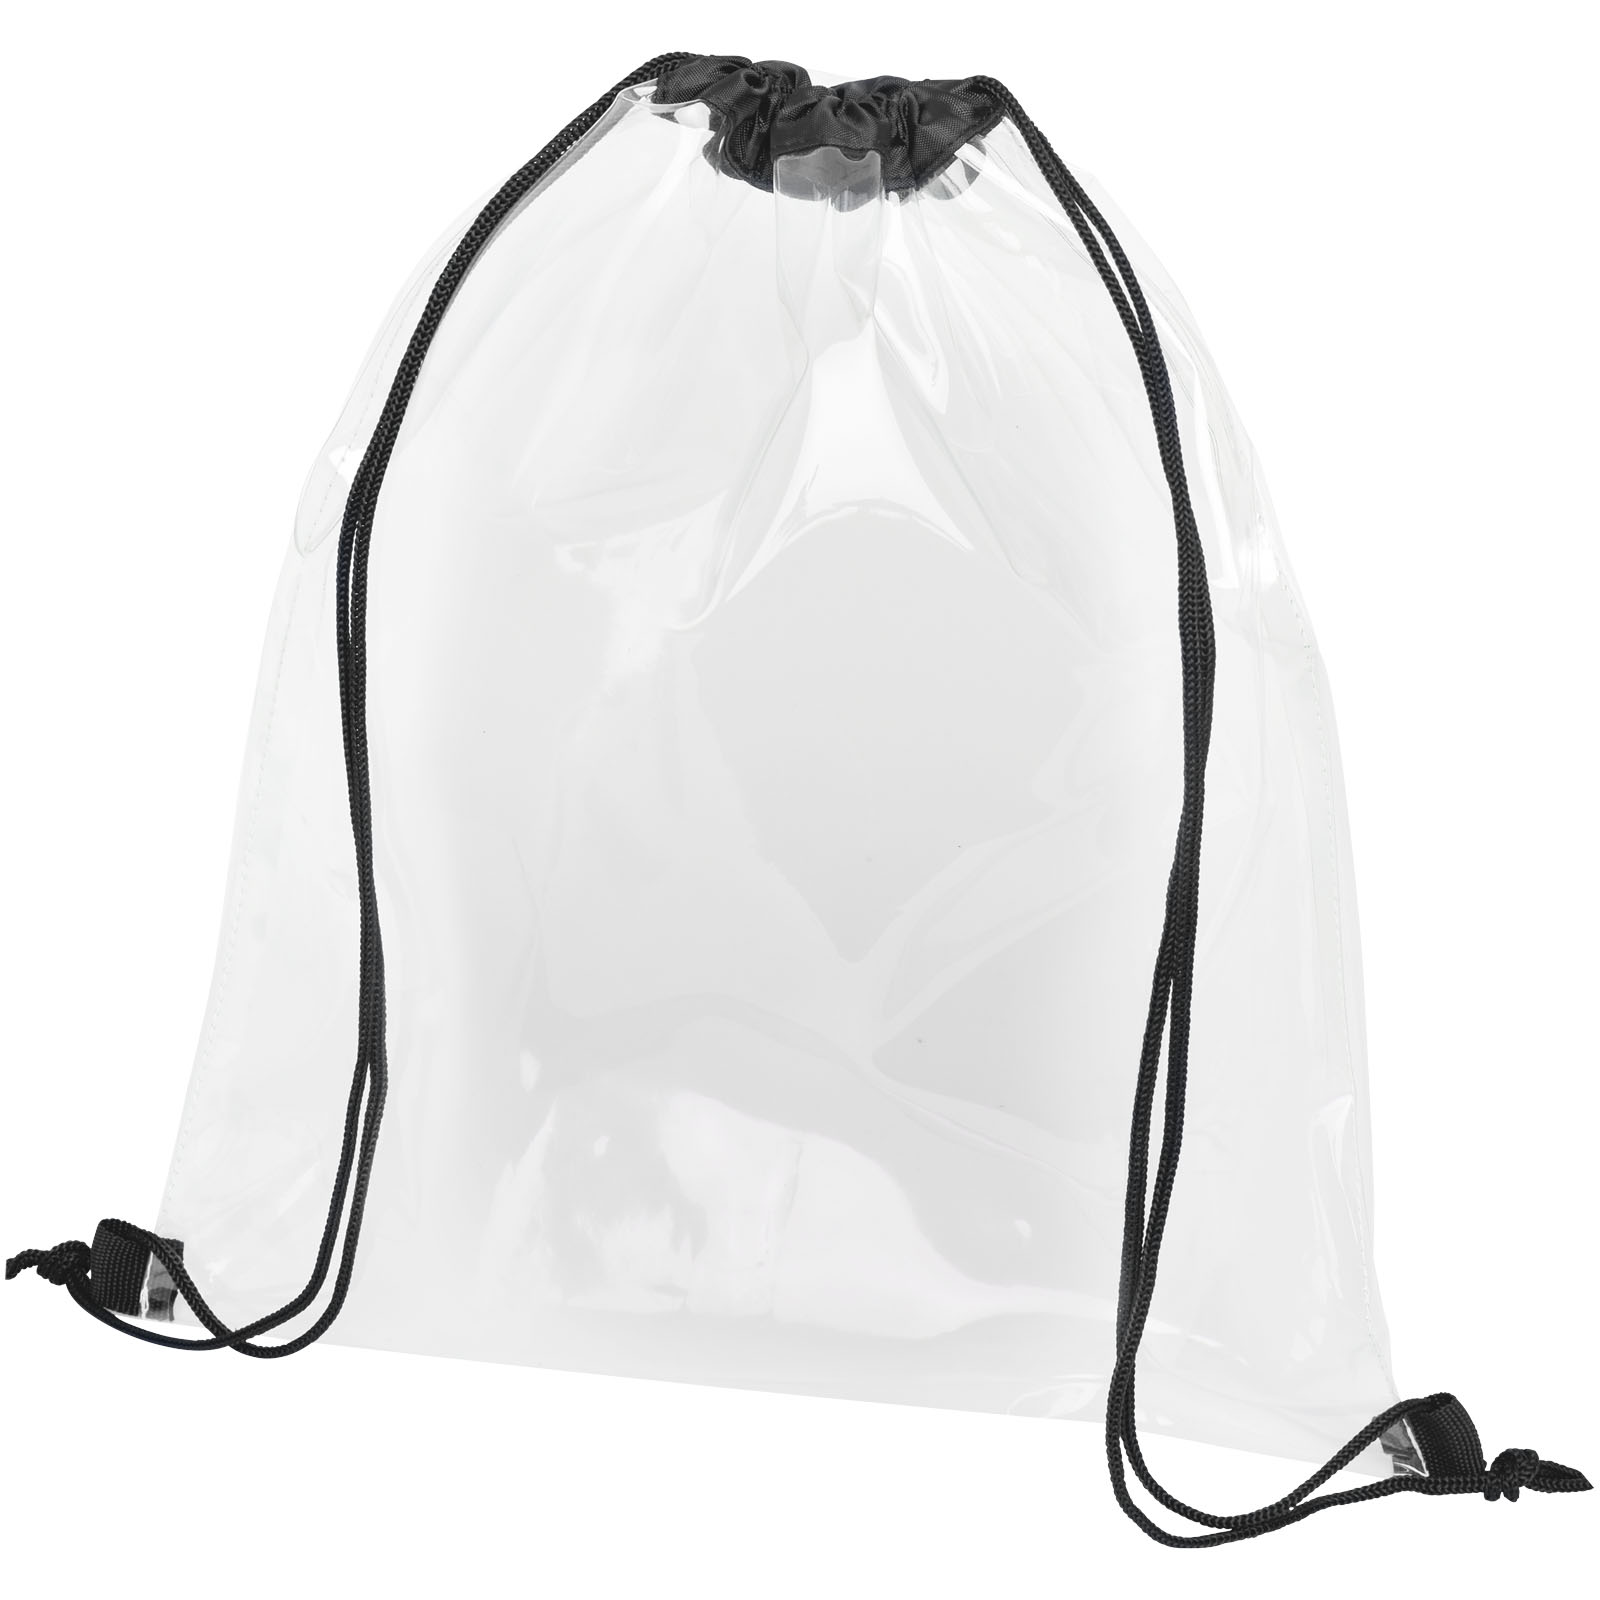 Bags - Lancaster transparent drawstring bag 5L